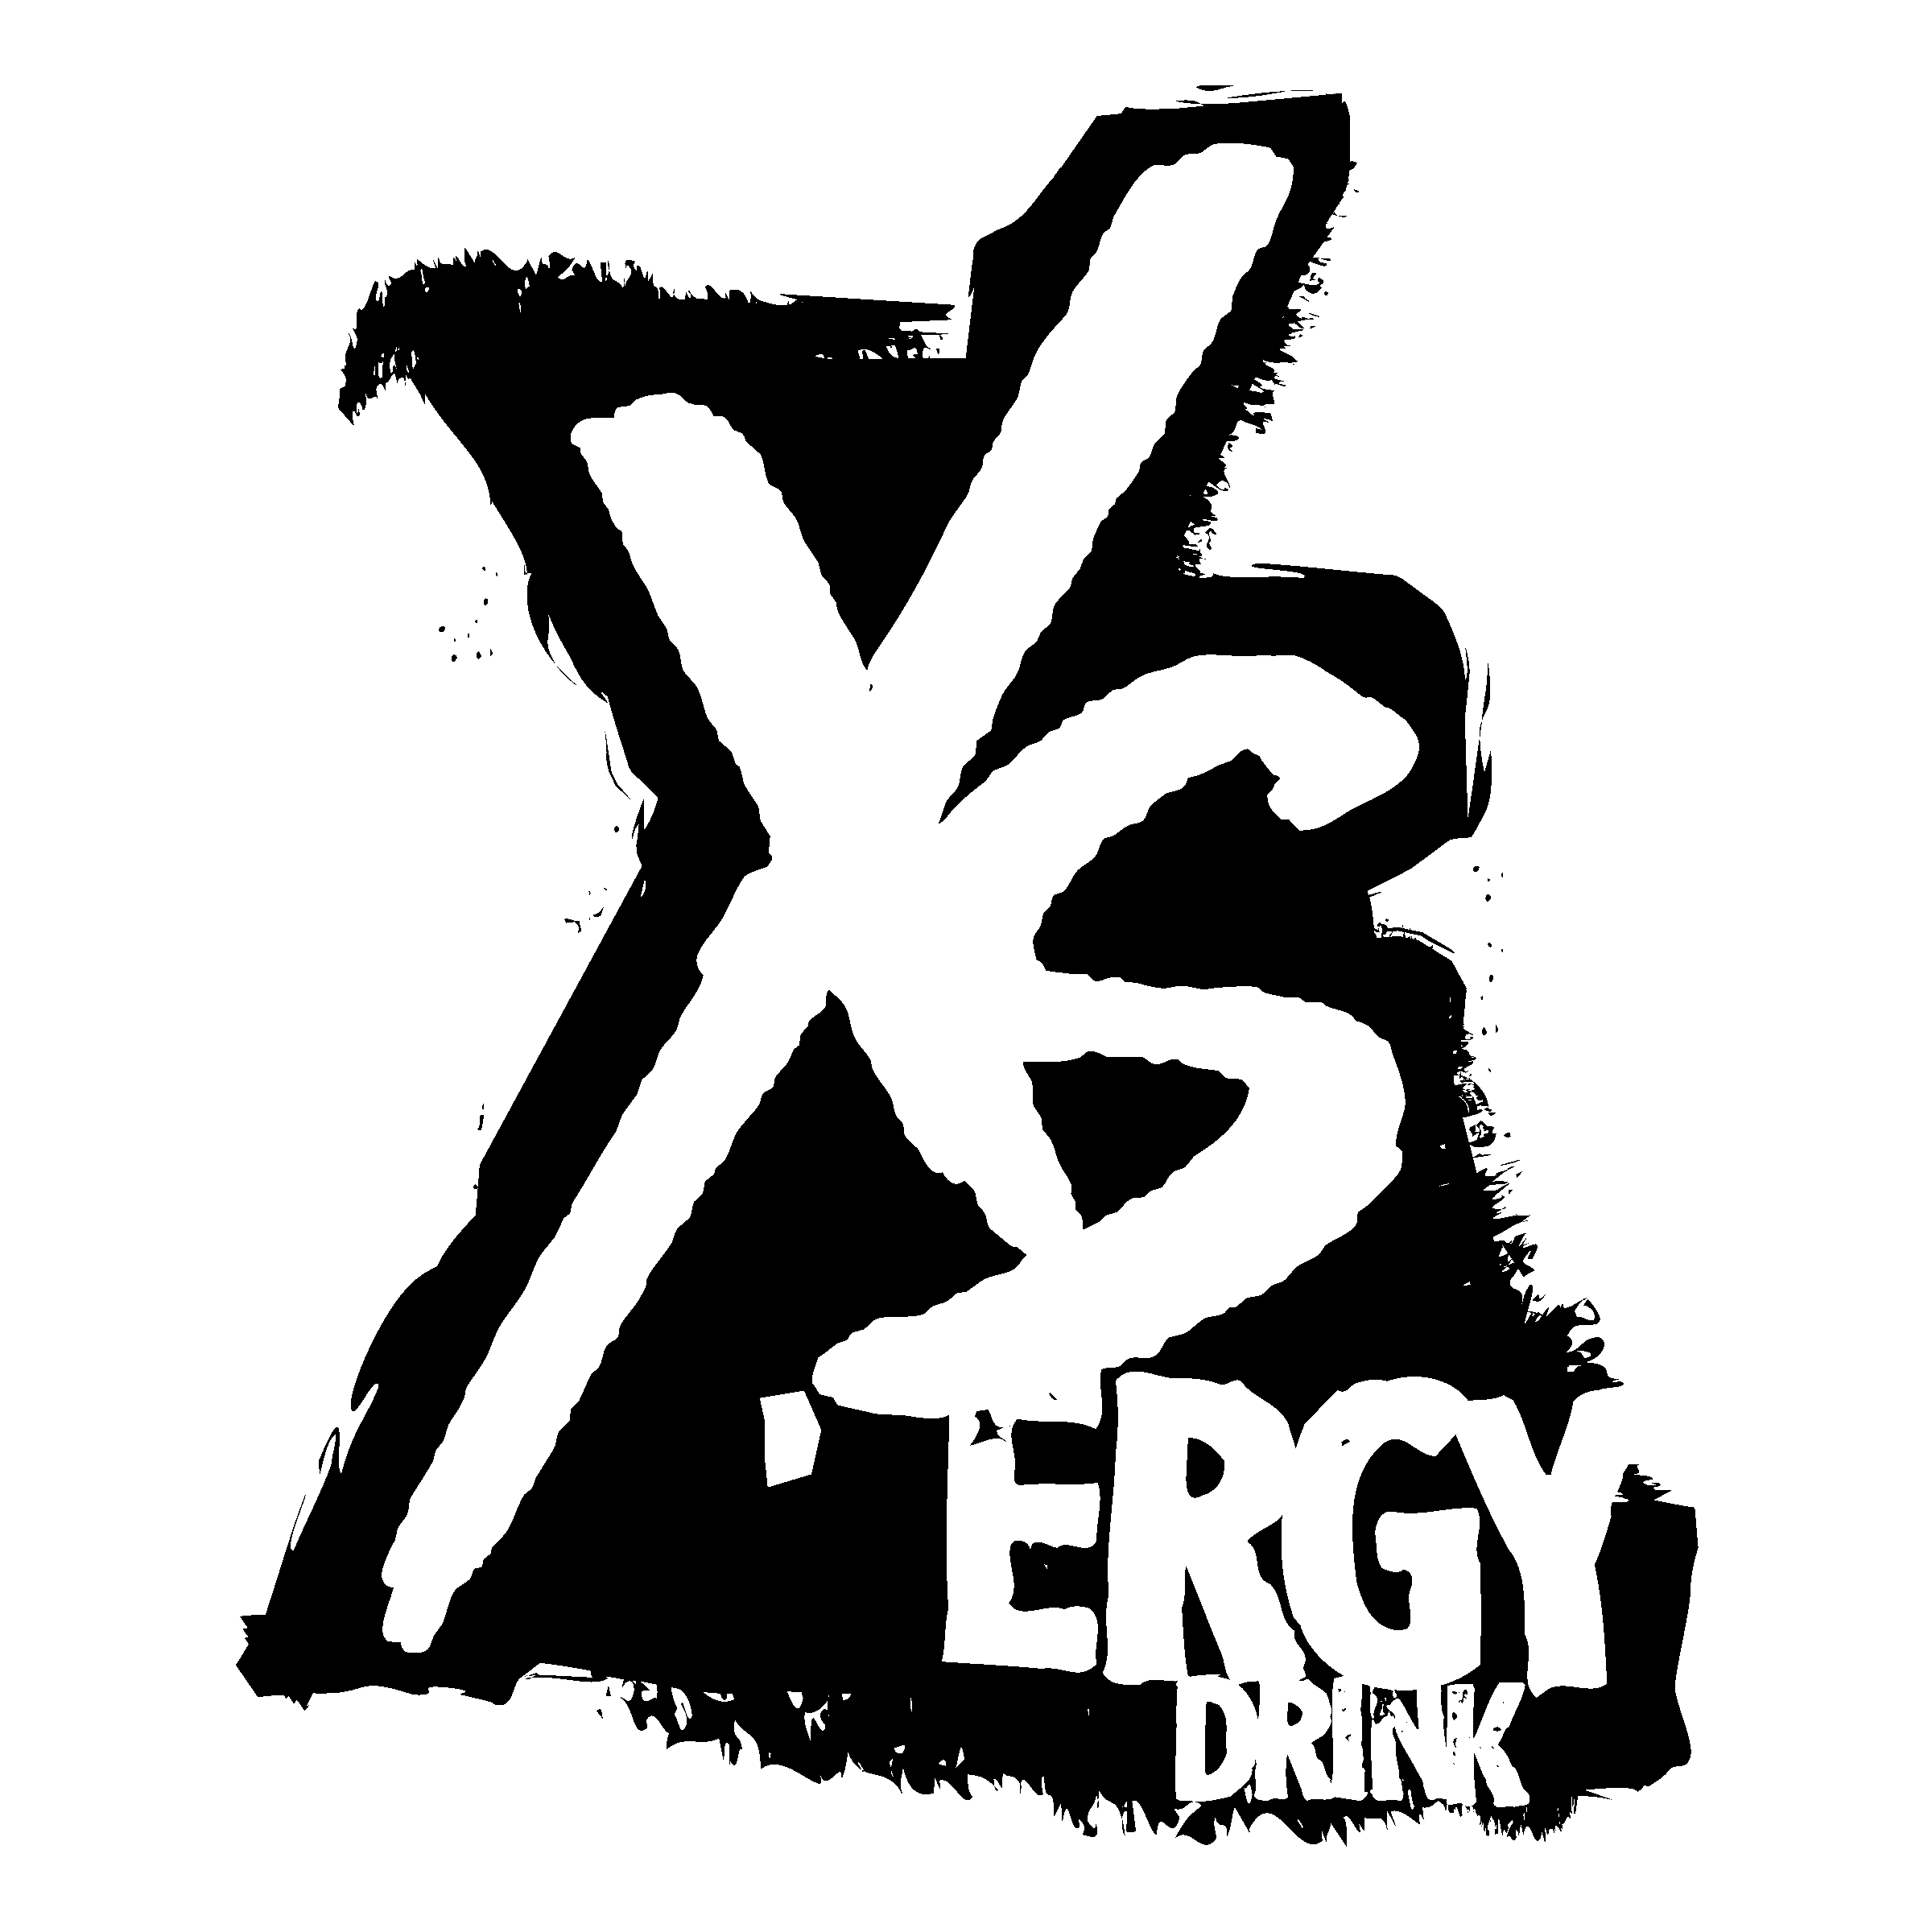 XS Logo - XS Logo PNG Transparent & SVG Vector - Freebie Supply